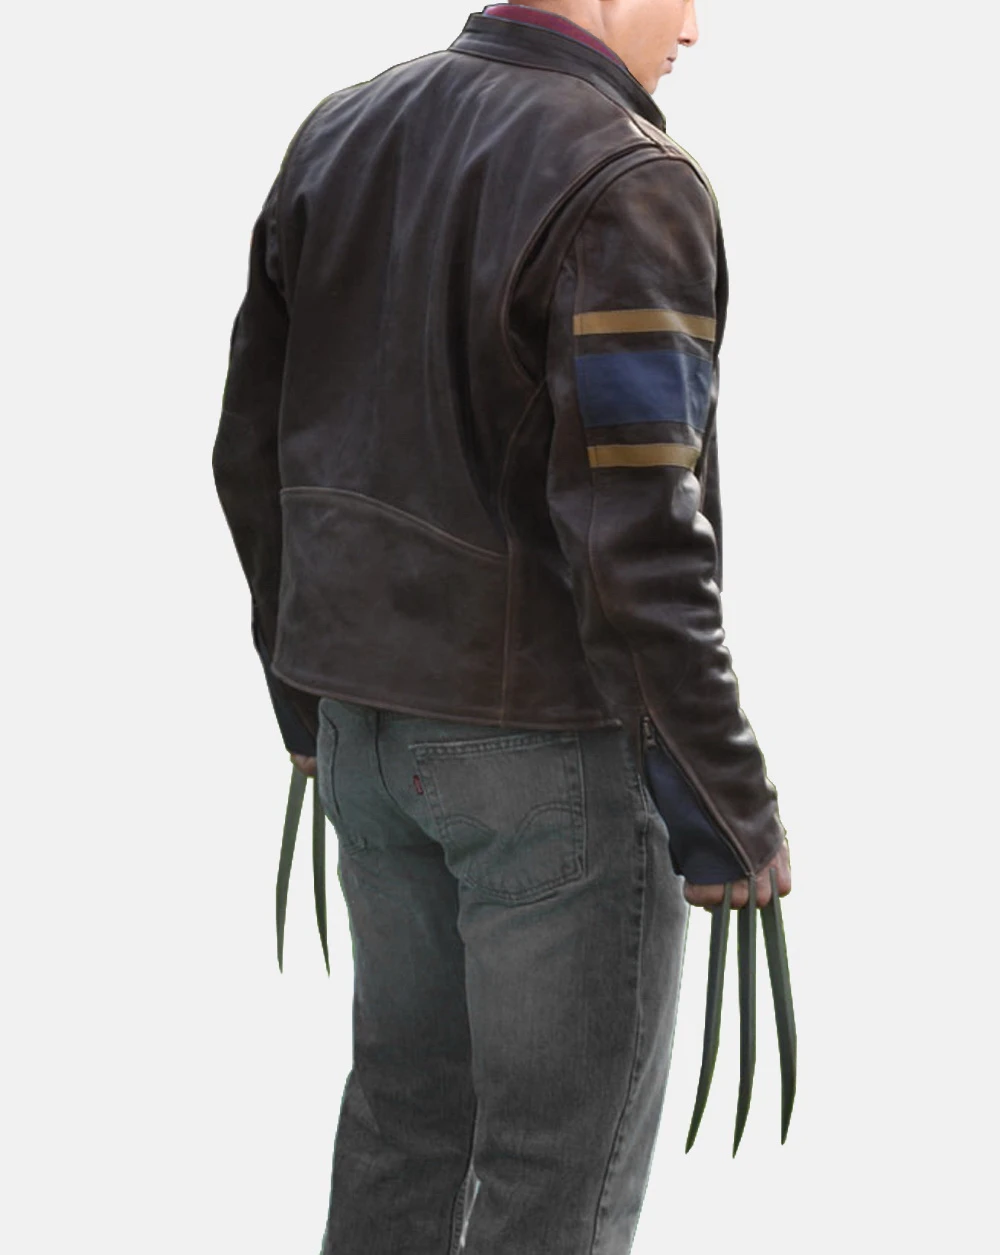 X Men Wolverine Leather Jacket